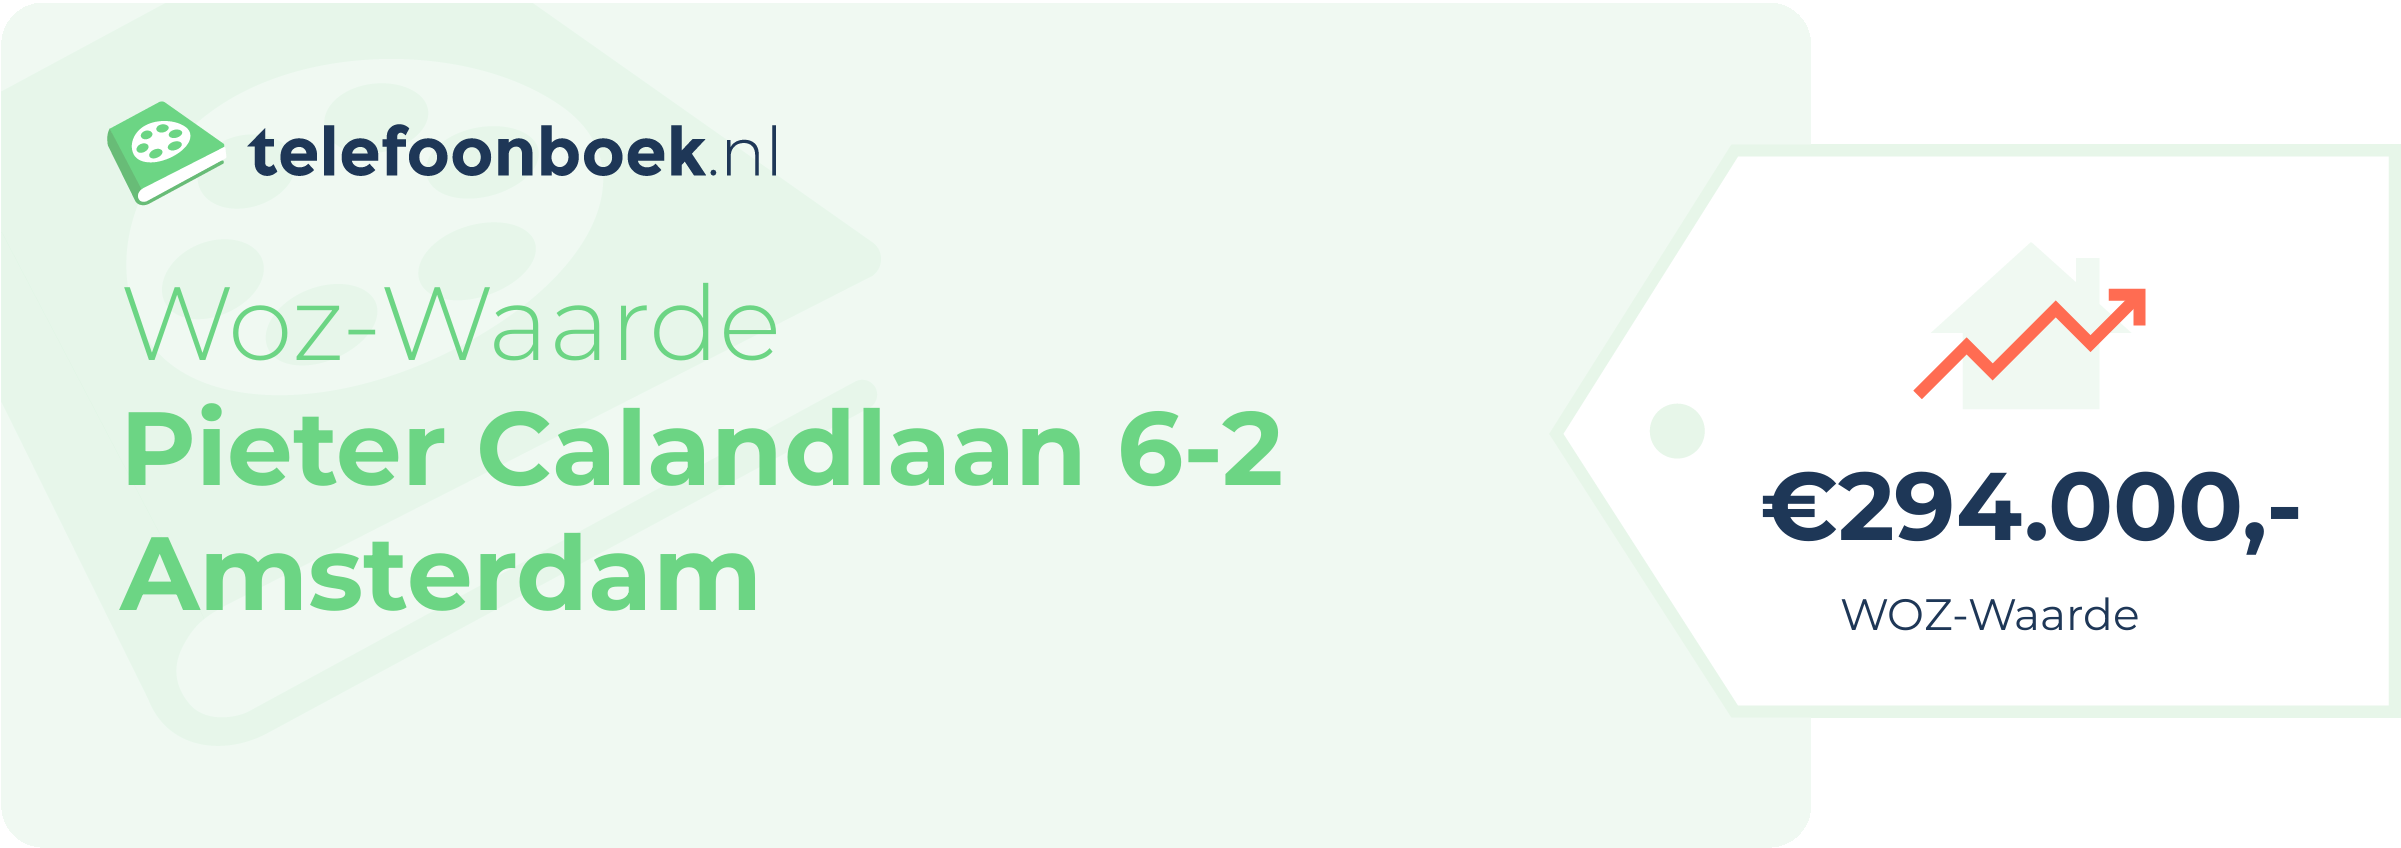 WOZ-waarde Pieter Calandlaan 6-2 Amsterdam